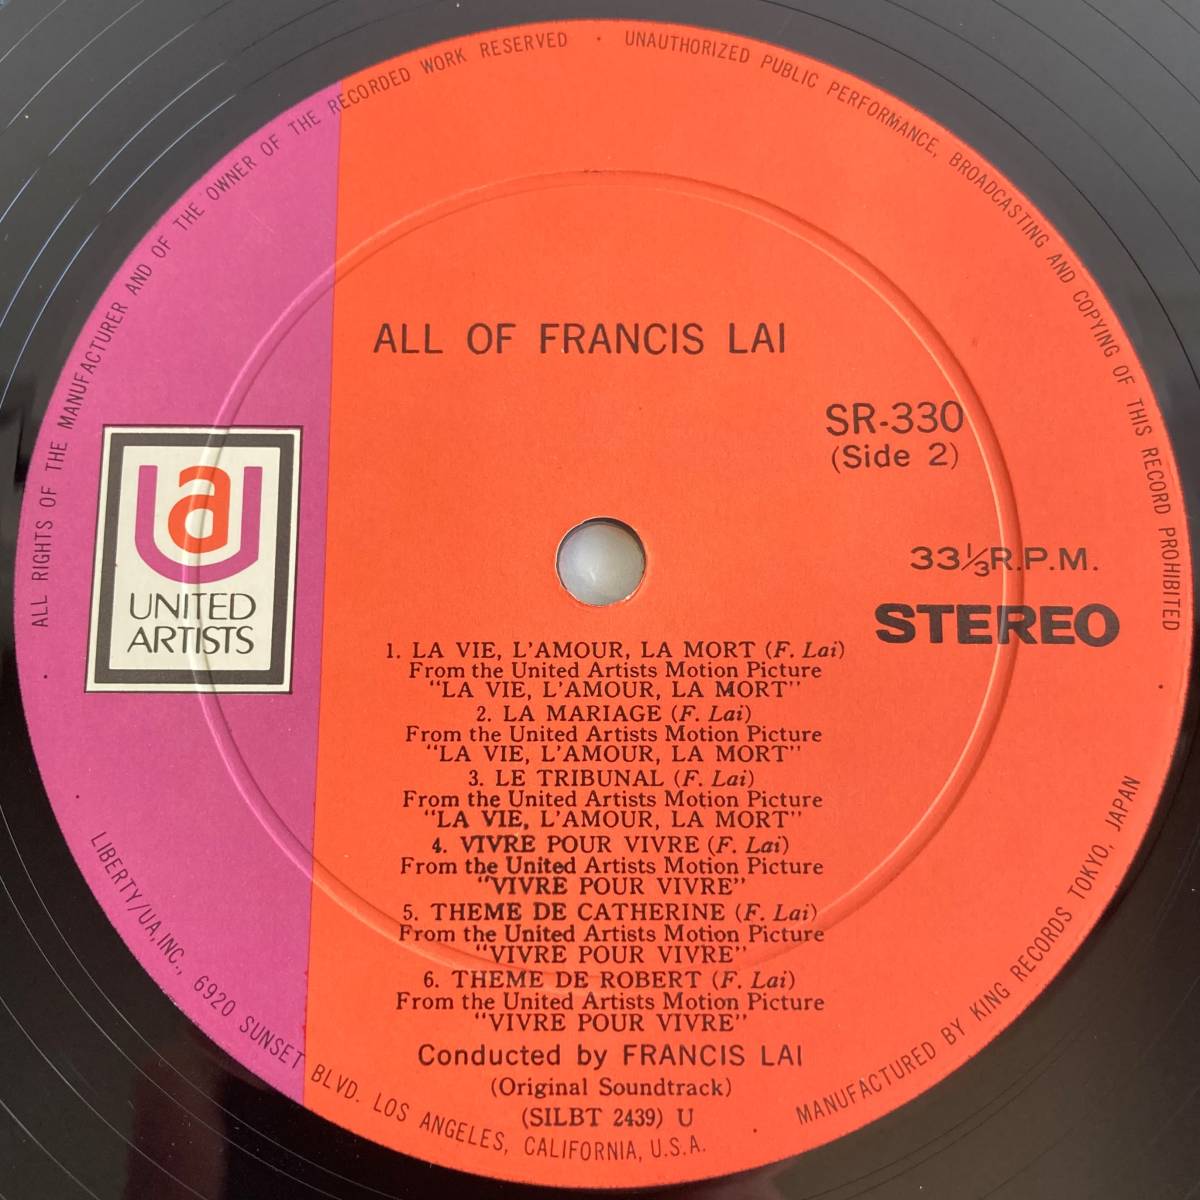  Francis * Ray. all ~ original * soundtrack domestic record LP KI SR 330 obi attaching 